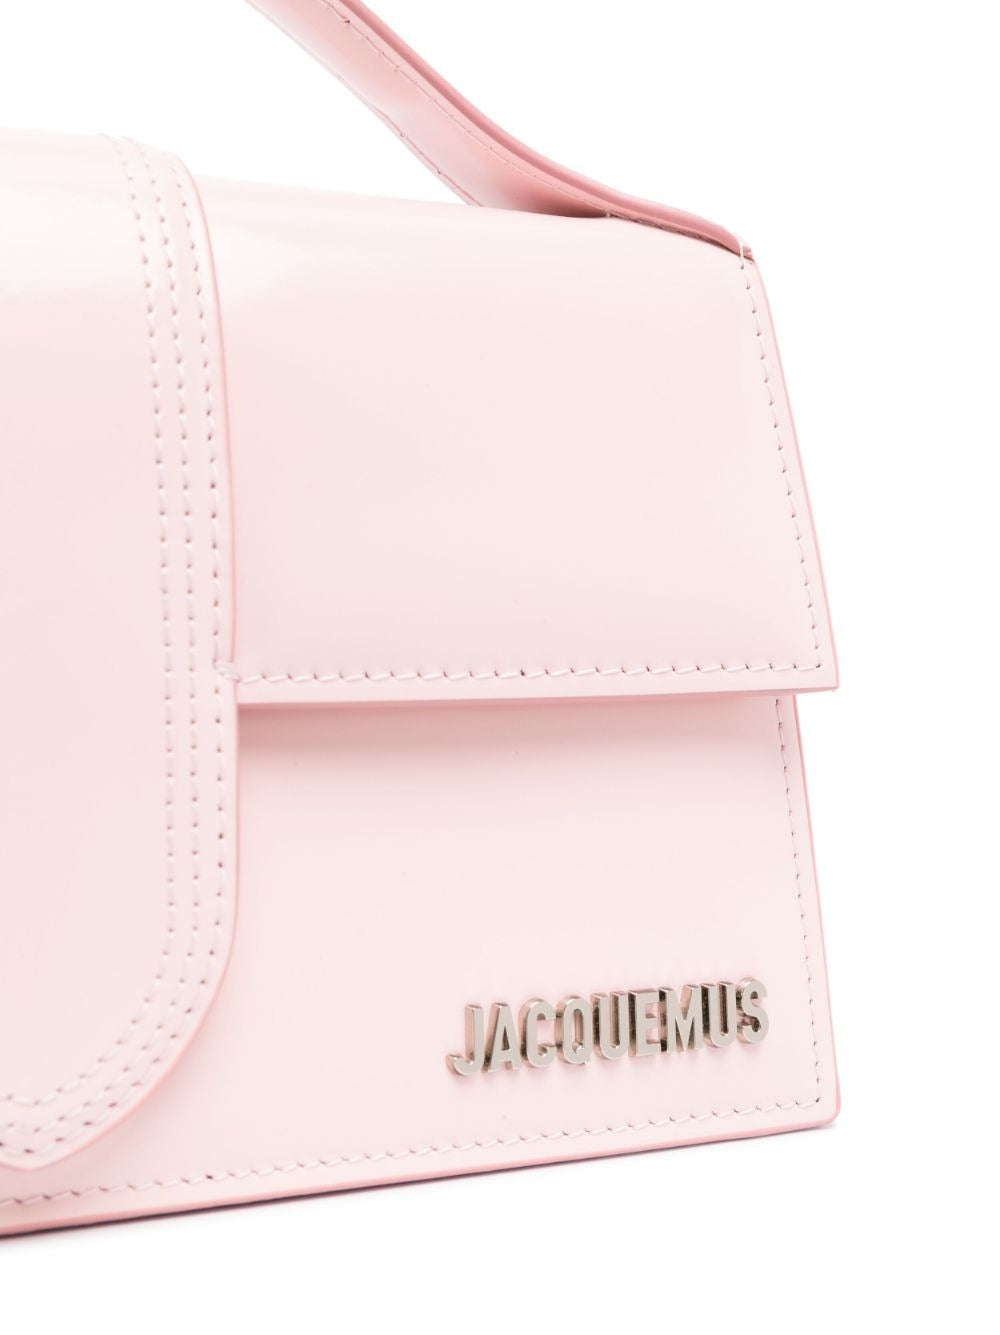 Jacquemus Le Grand Bambino Handbag (More Colors)